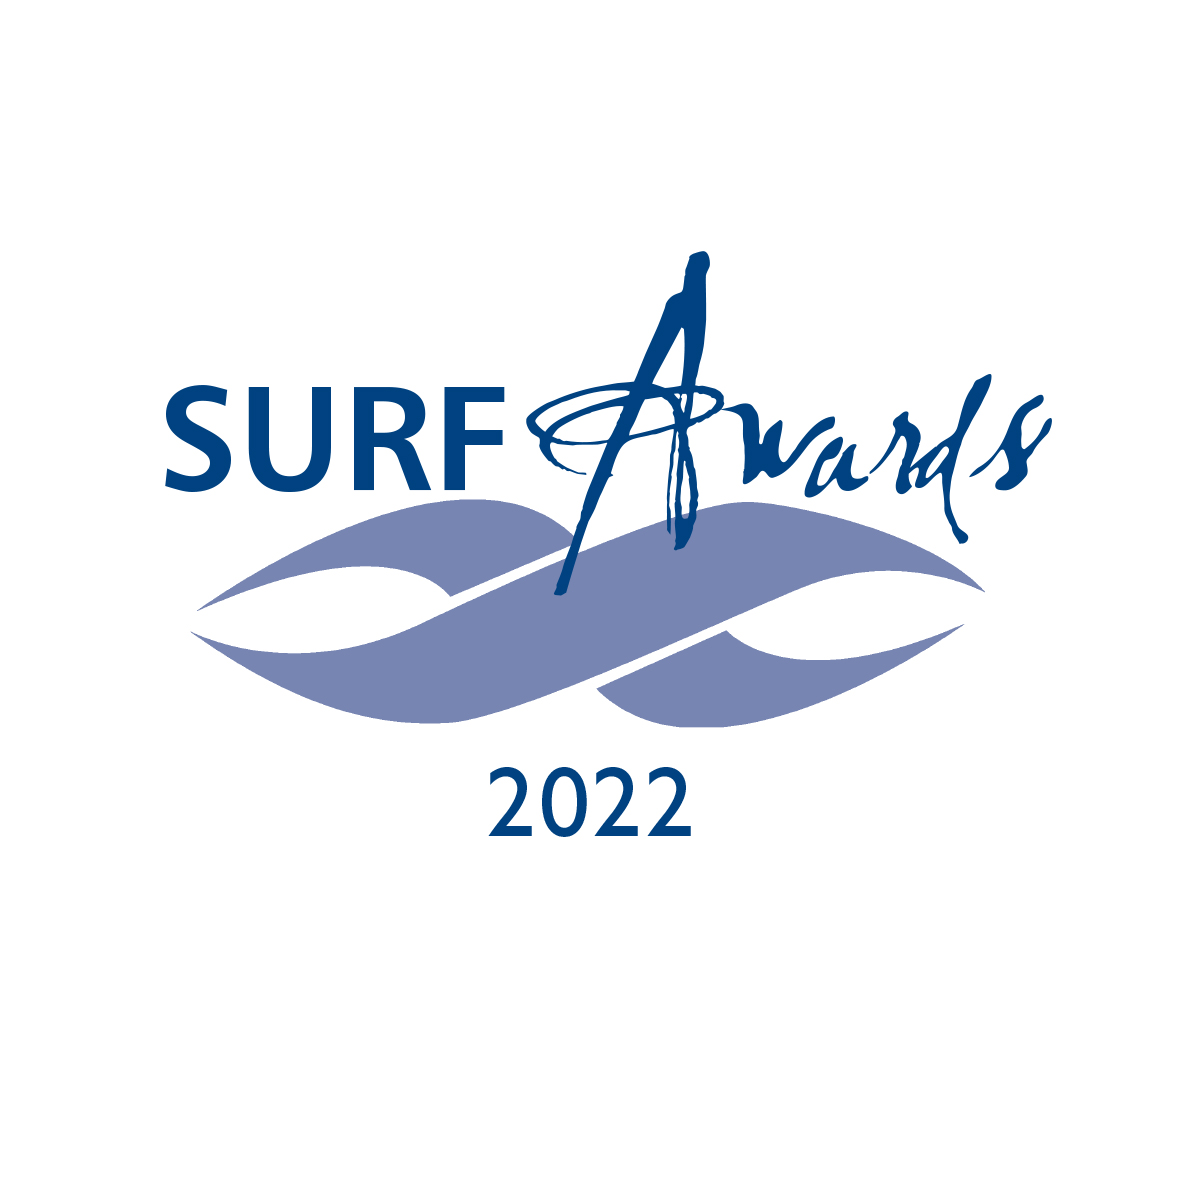 Shortlist for 2022 SURF awards announced